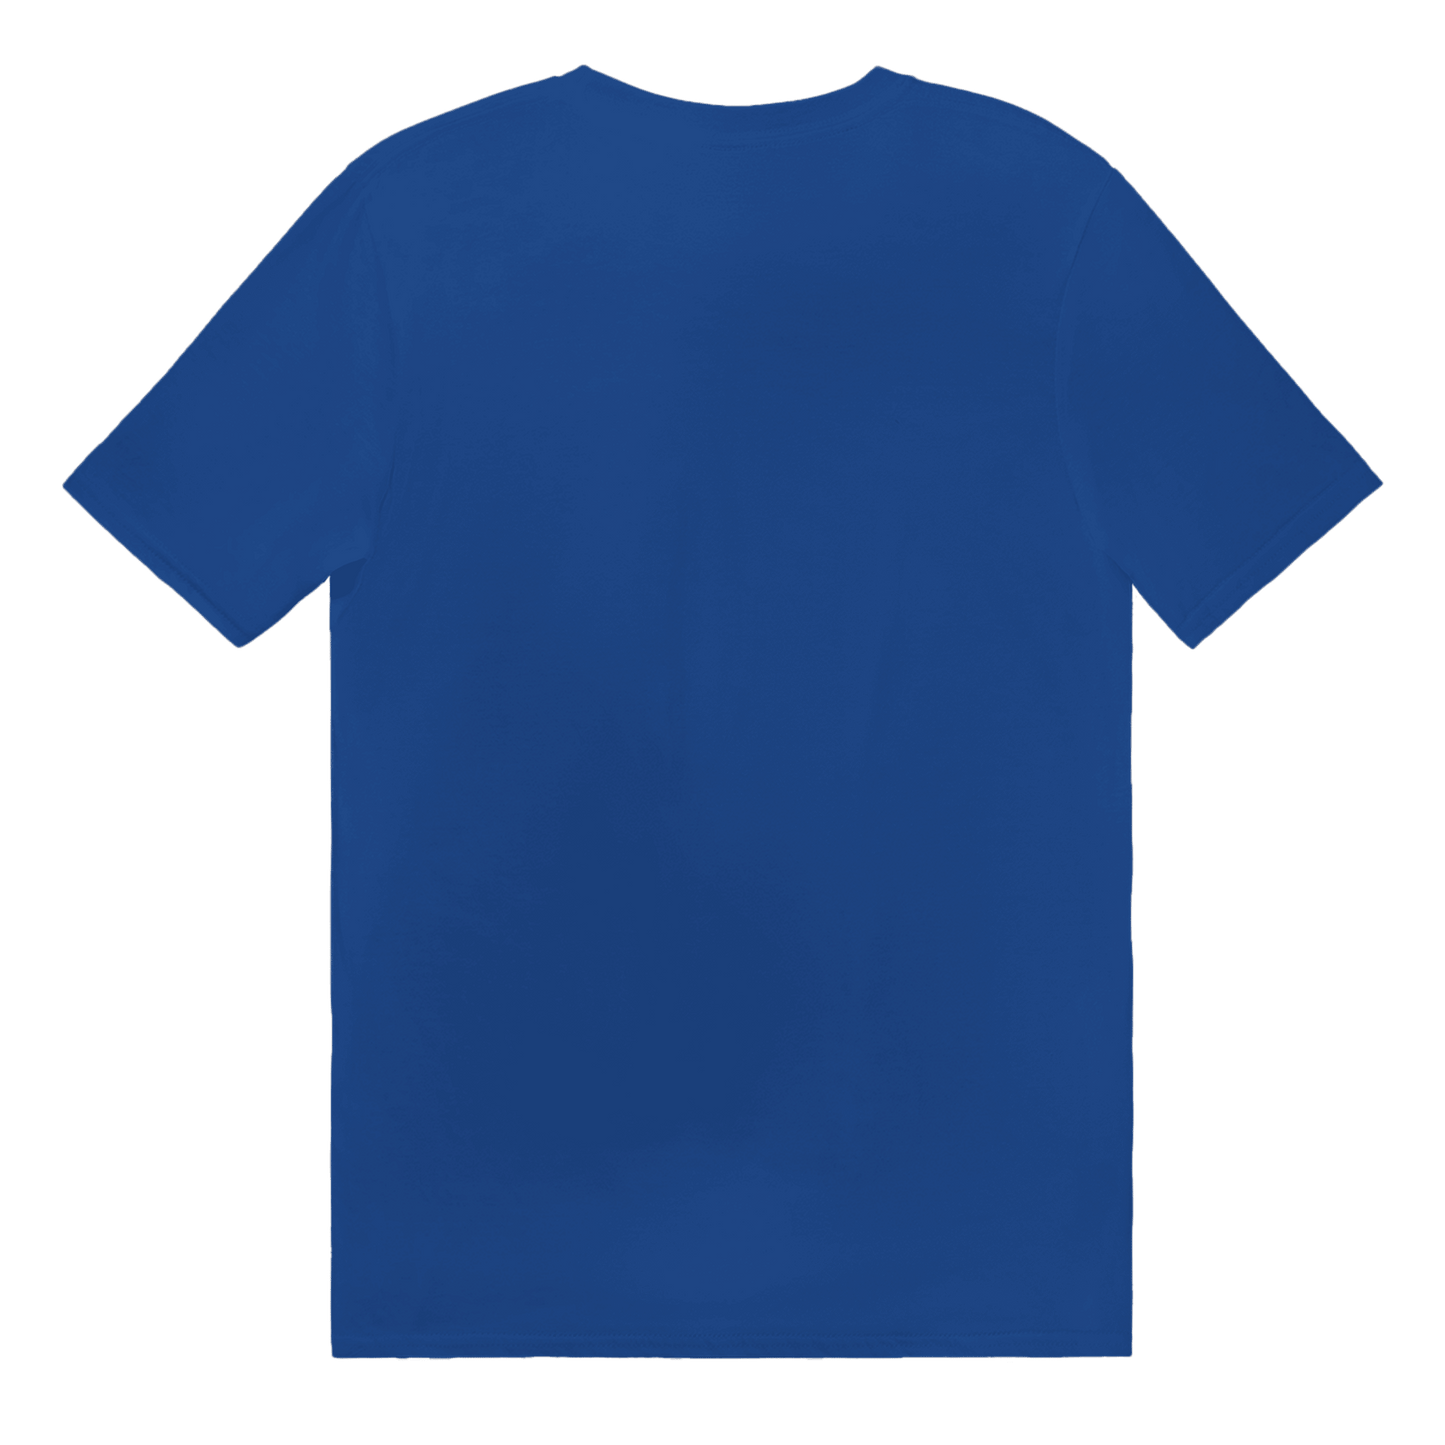 Gröt - T-shirt 